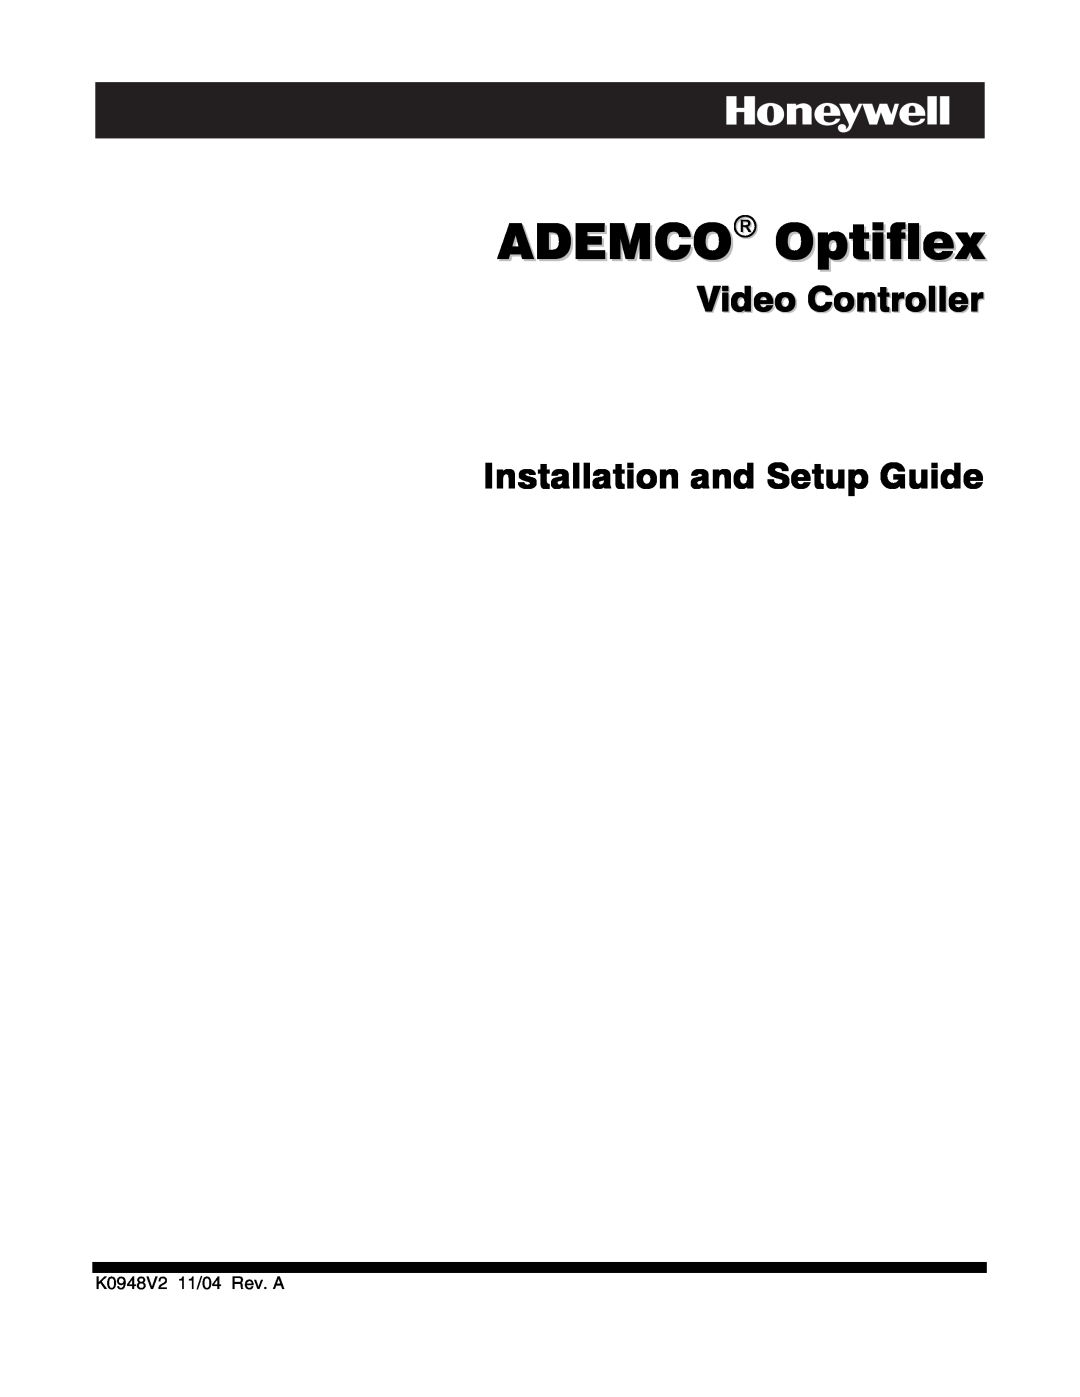 Honeywell setup guide ADEMCO Optiflex, Video Controller Installation and Setup Guide 